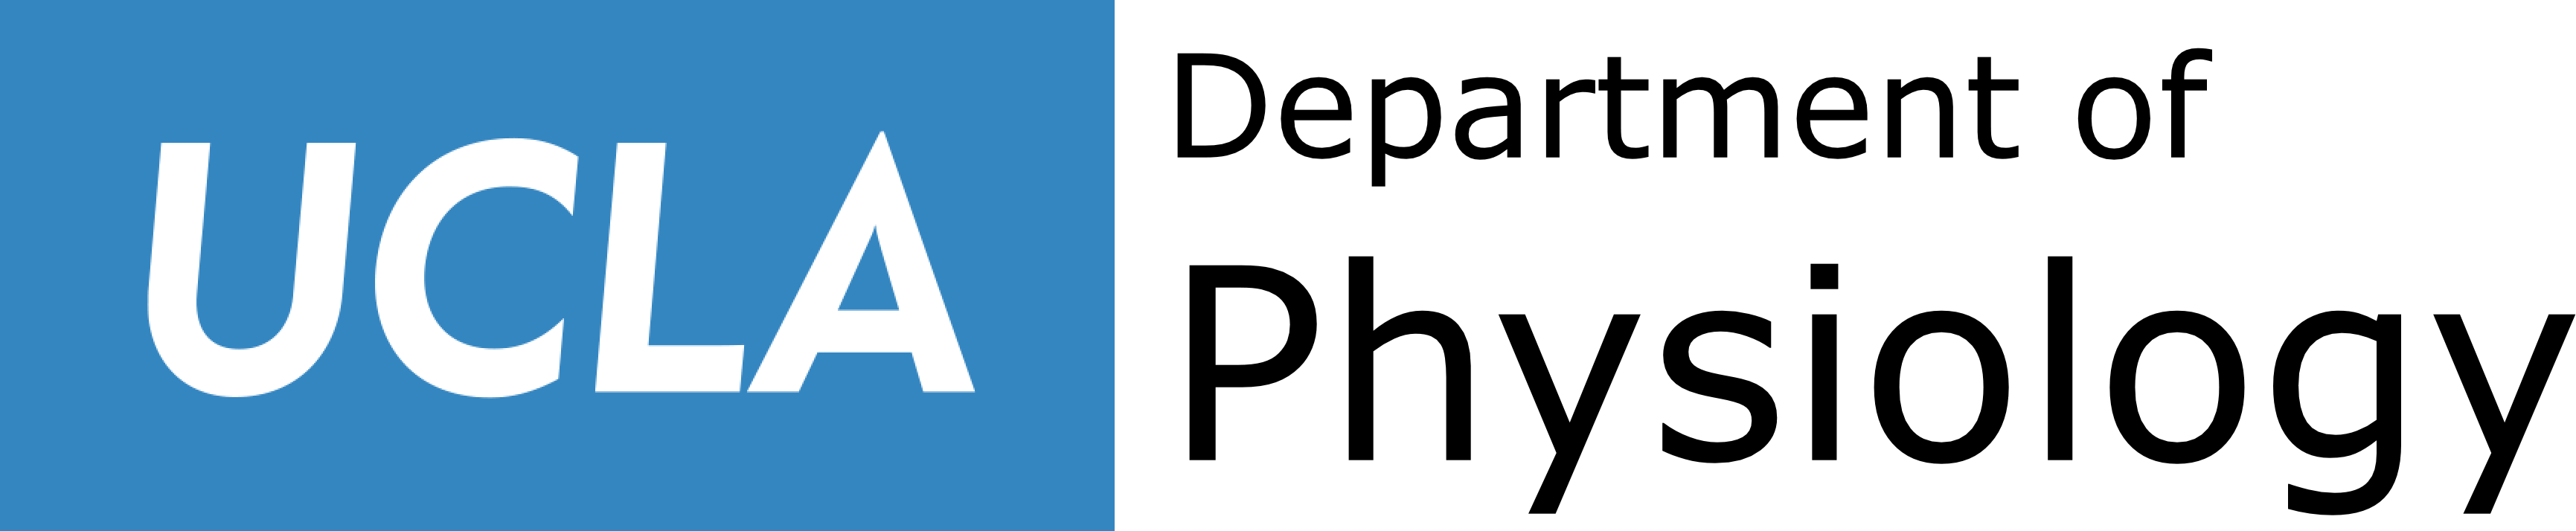 Physiology logo